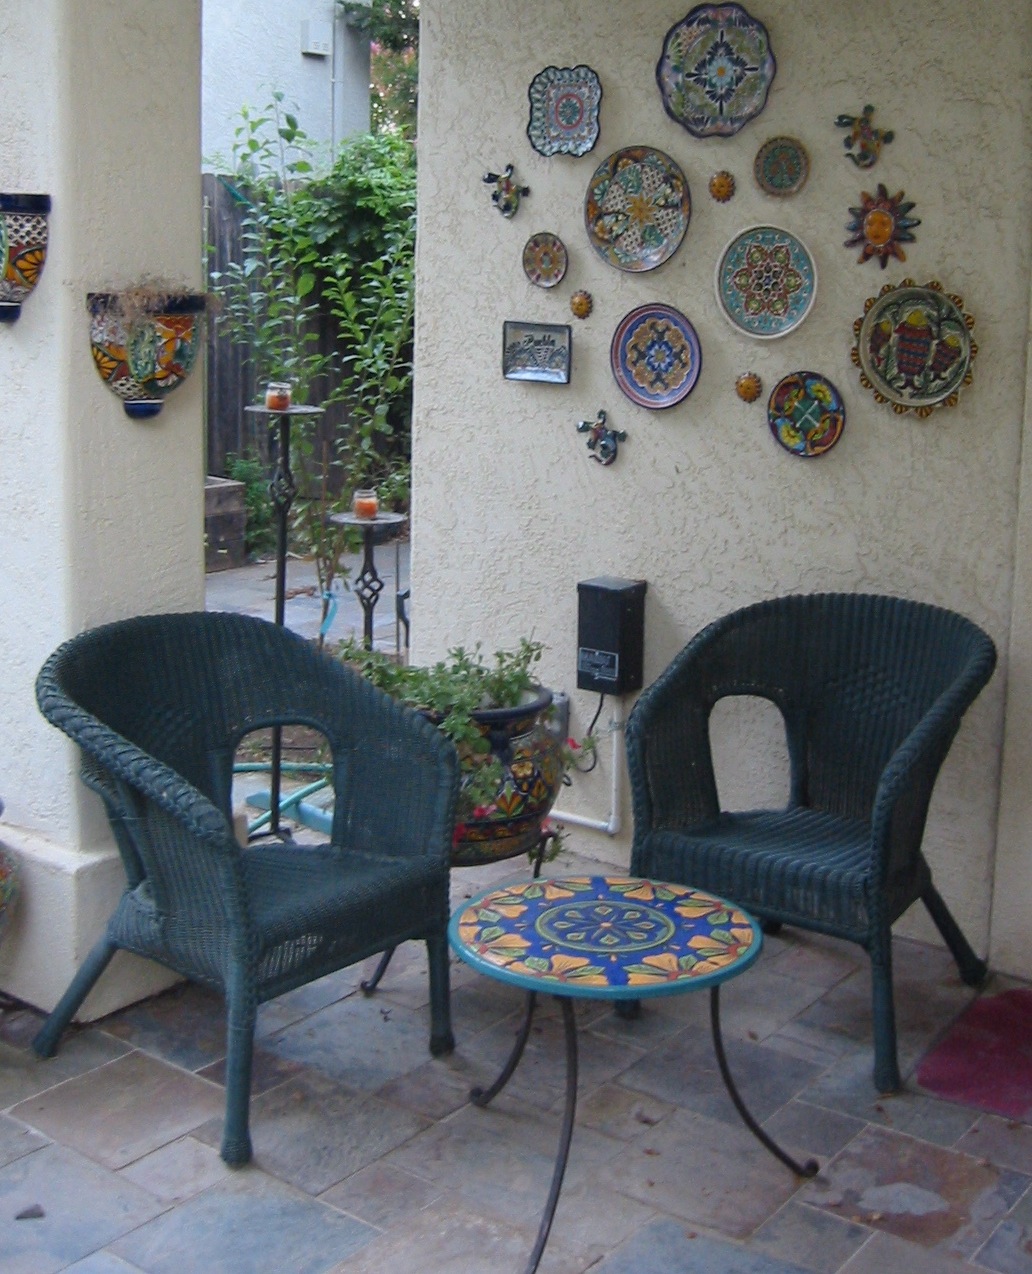 Colorful Round Patio Table with Mandala Desgin